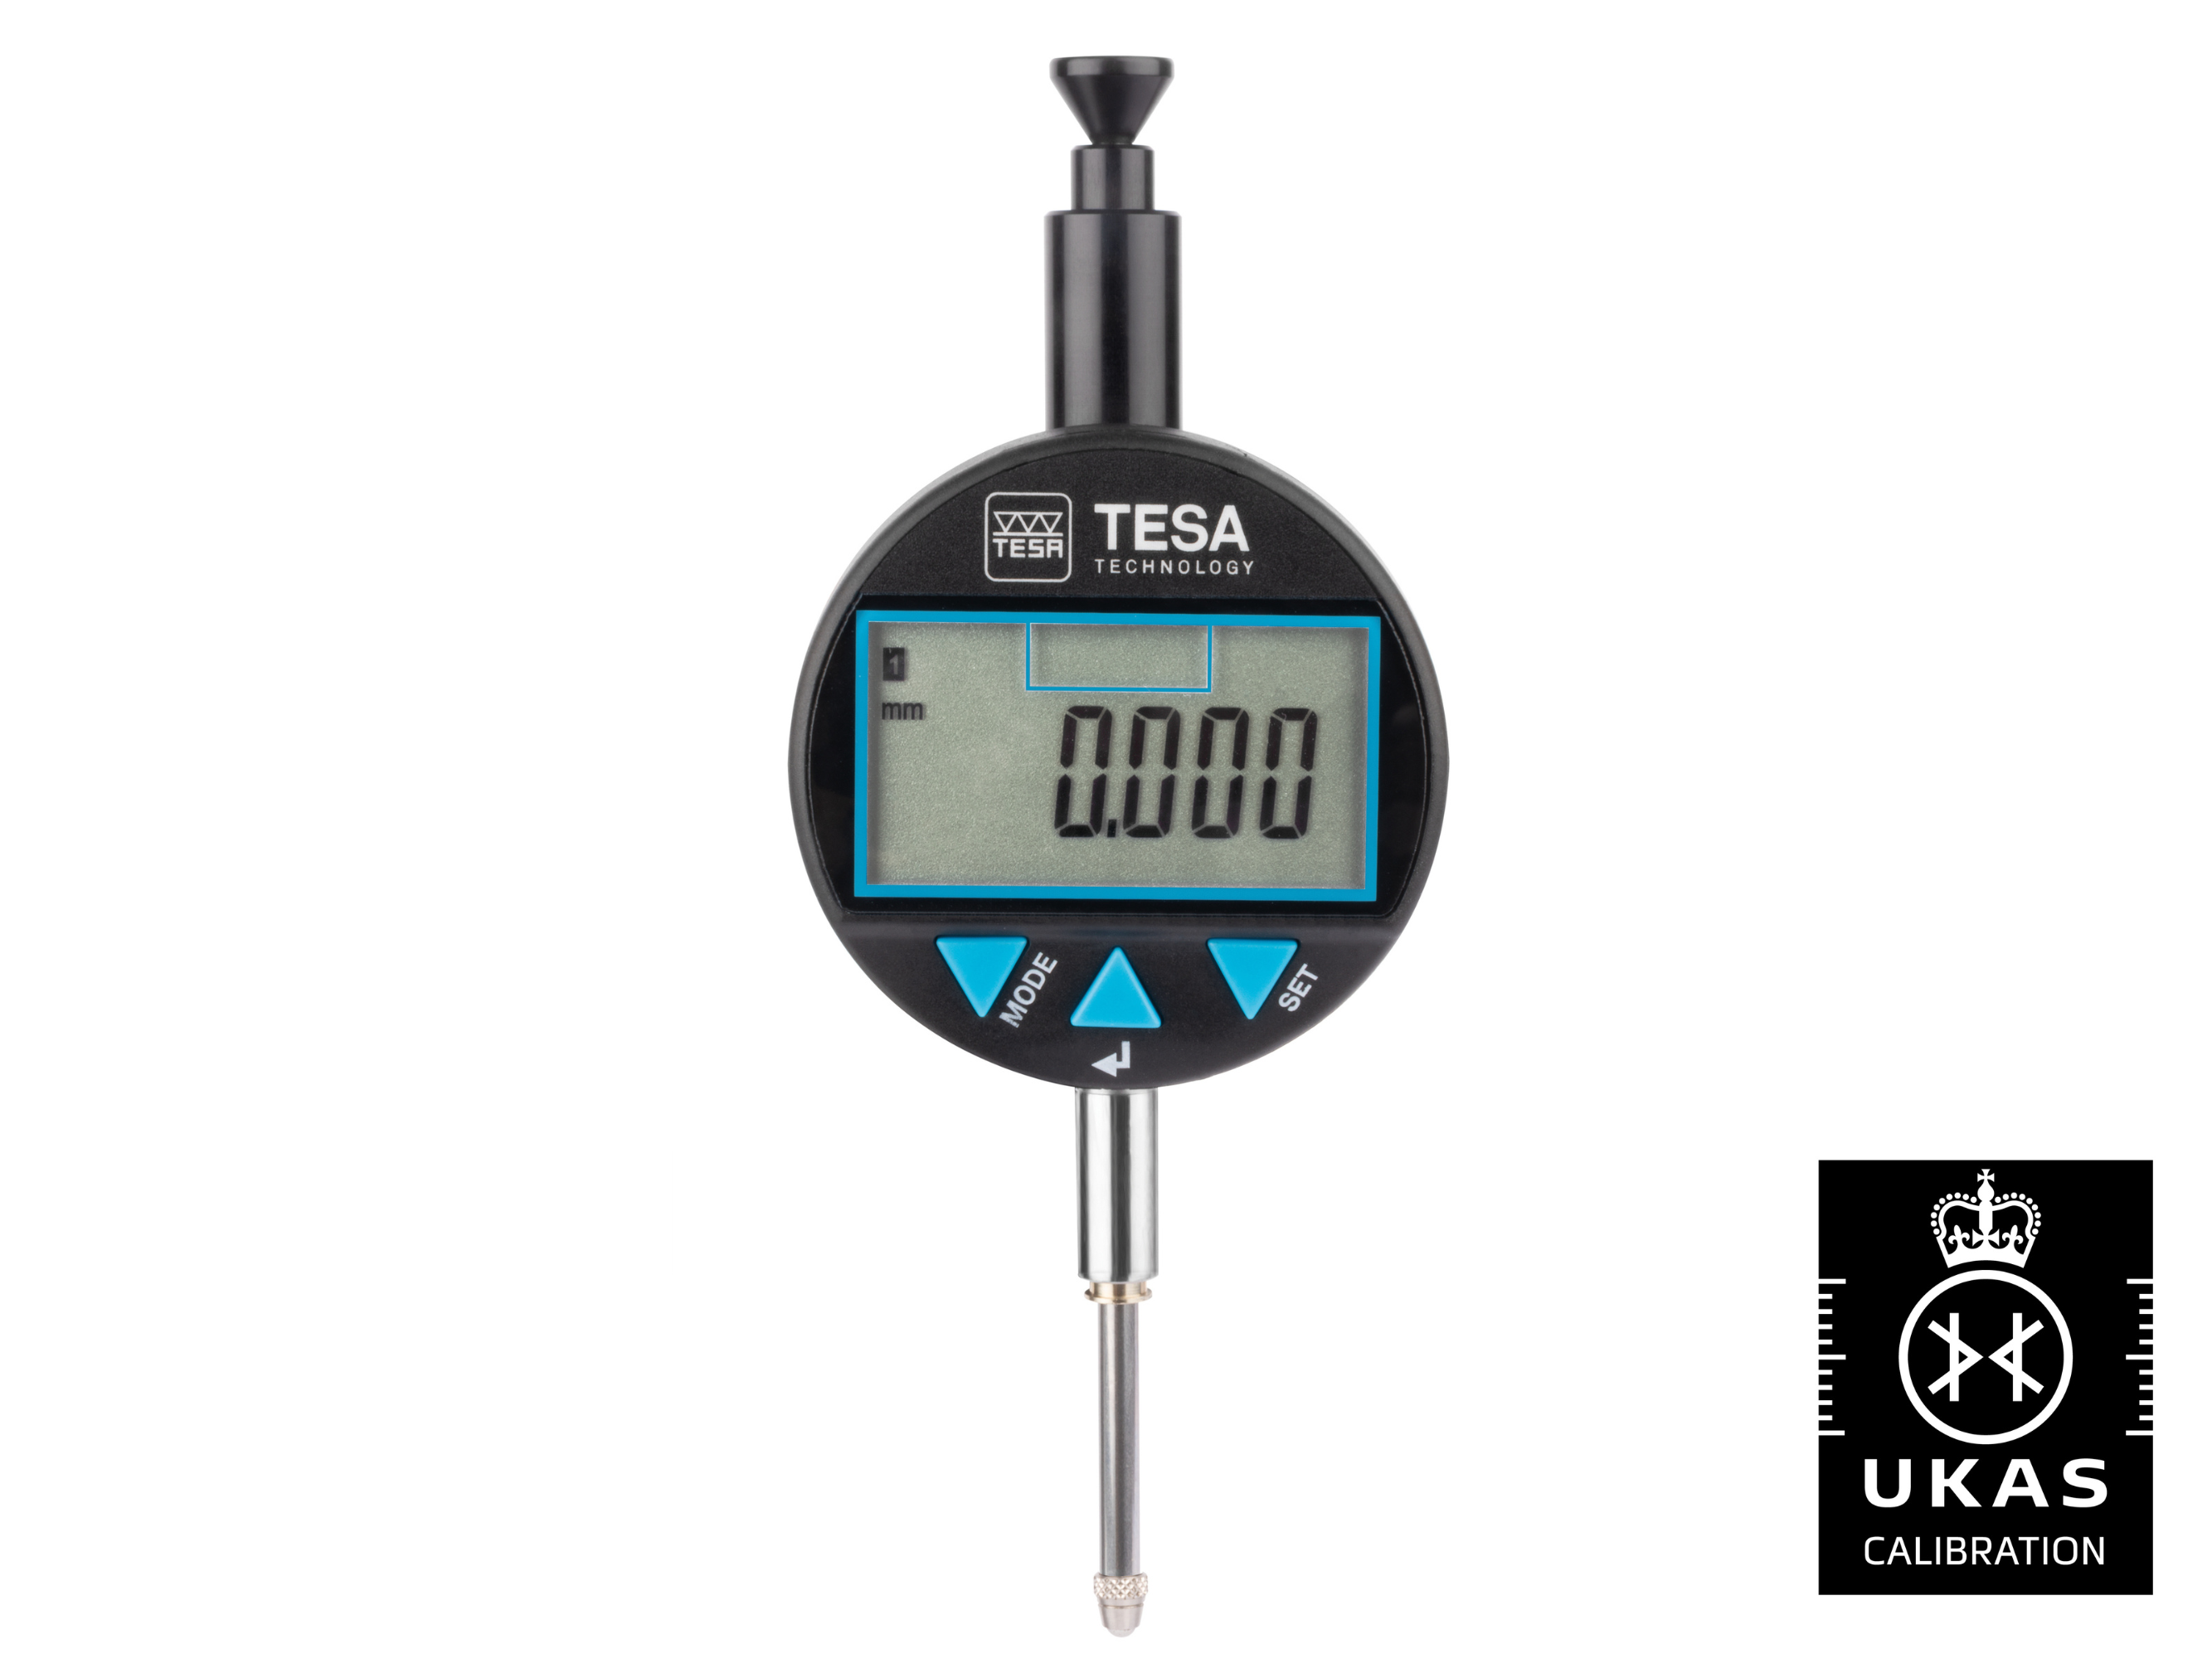 Tesa DIALTRONIC Digital Dial Gauge, measuring range 25mm Range 0.001mm Resolution IP54 01930305 with UKAS Calibration